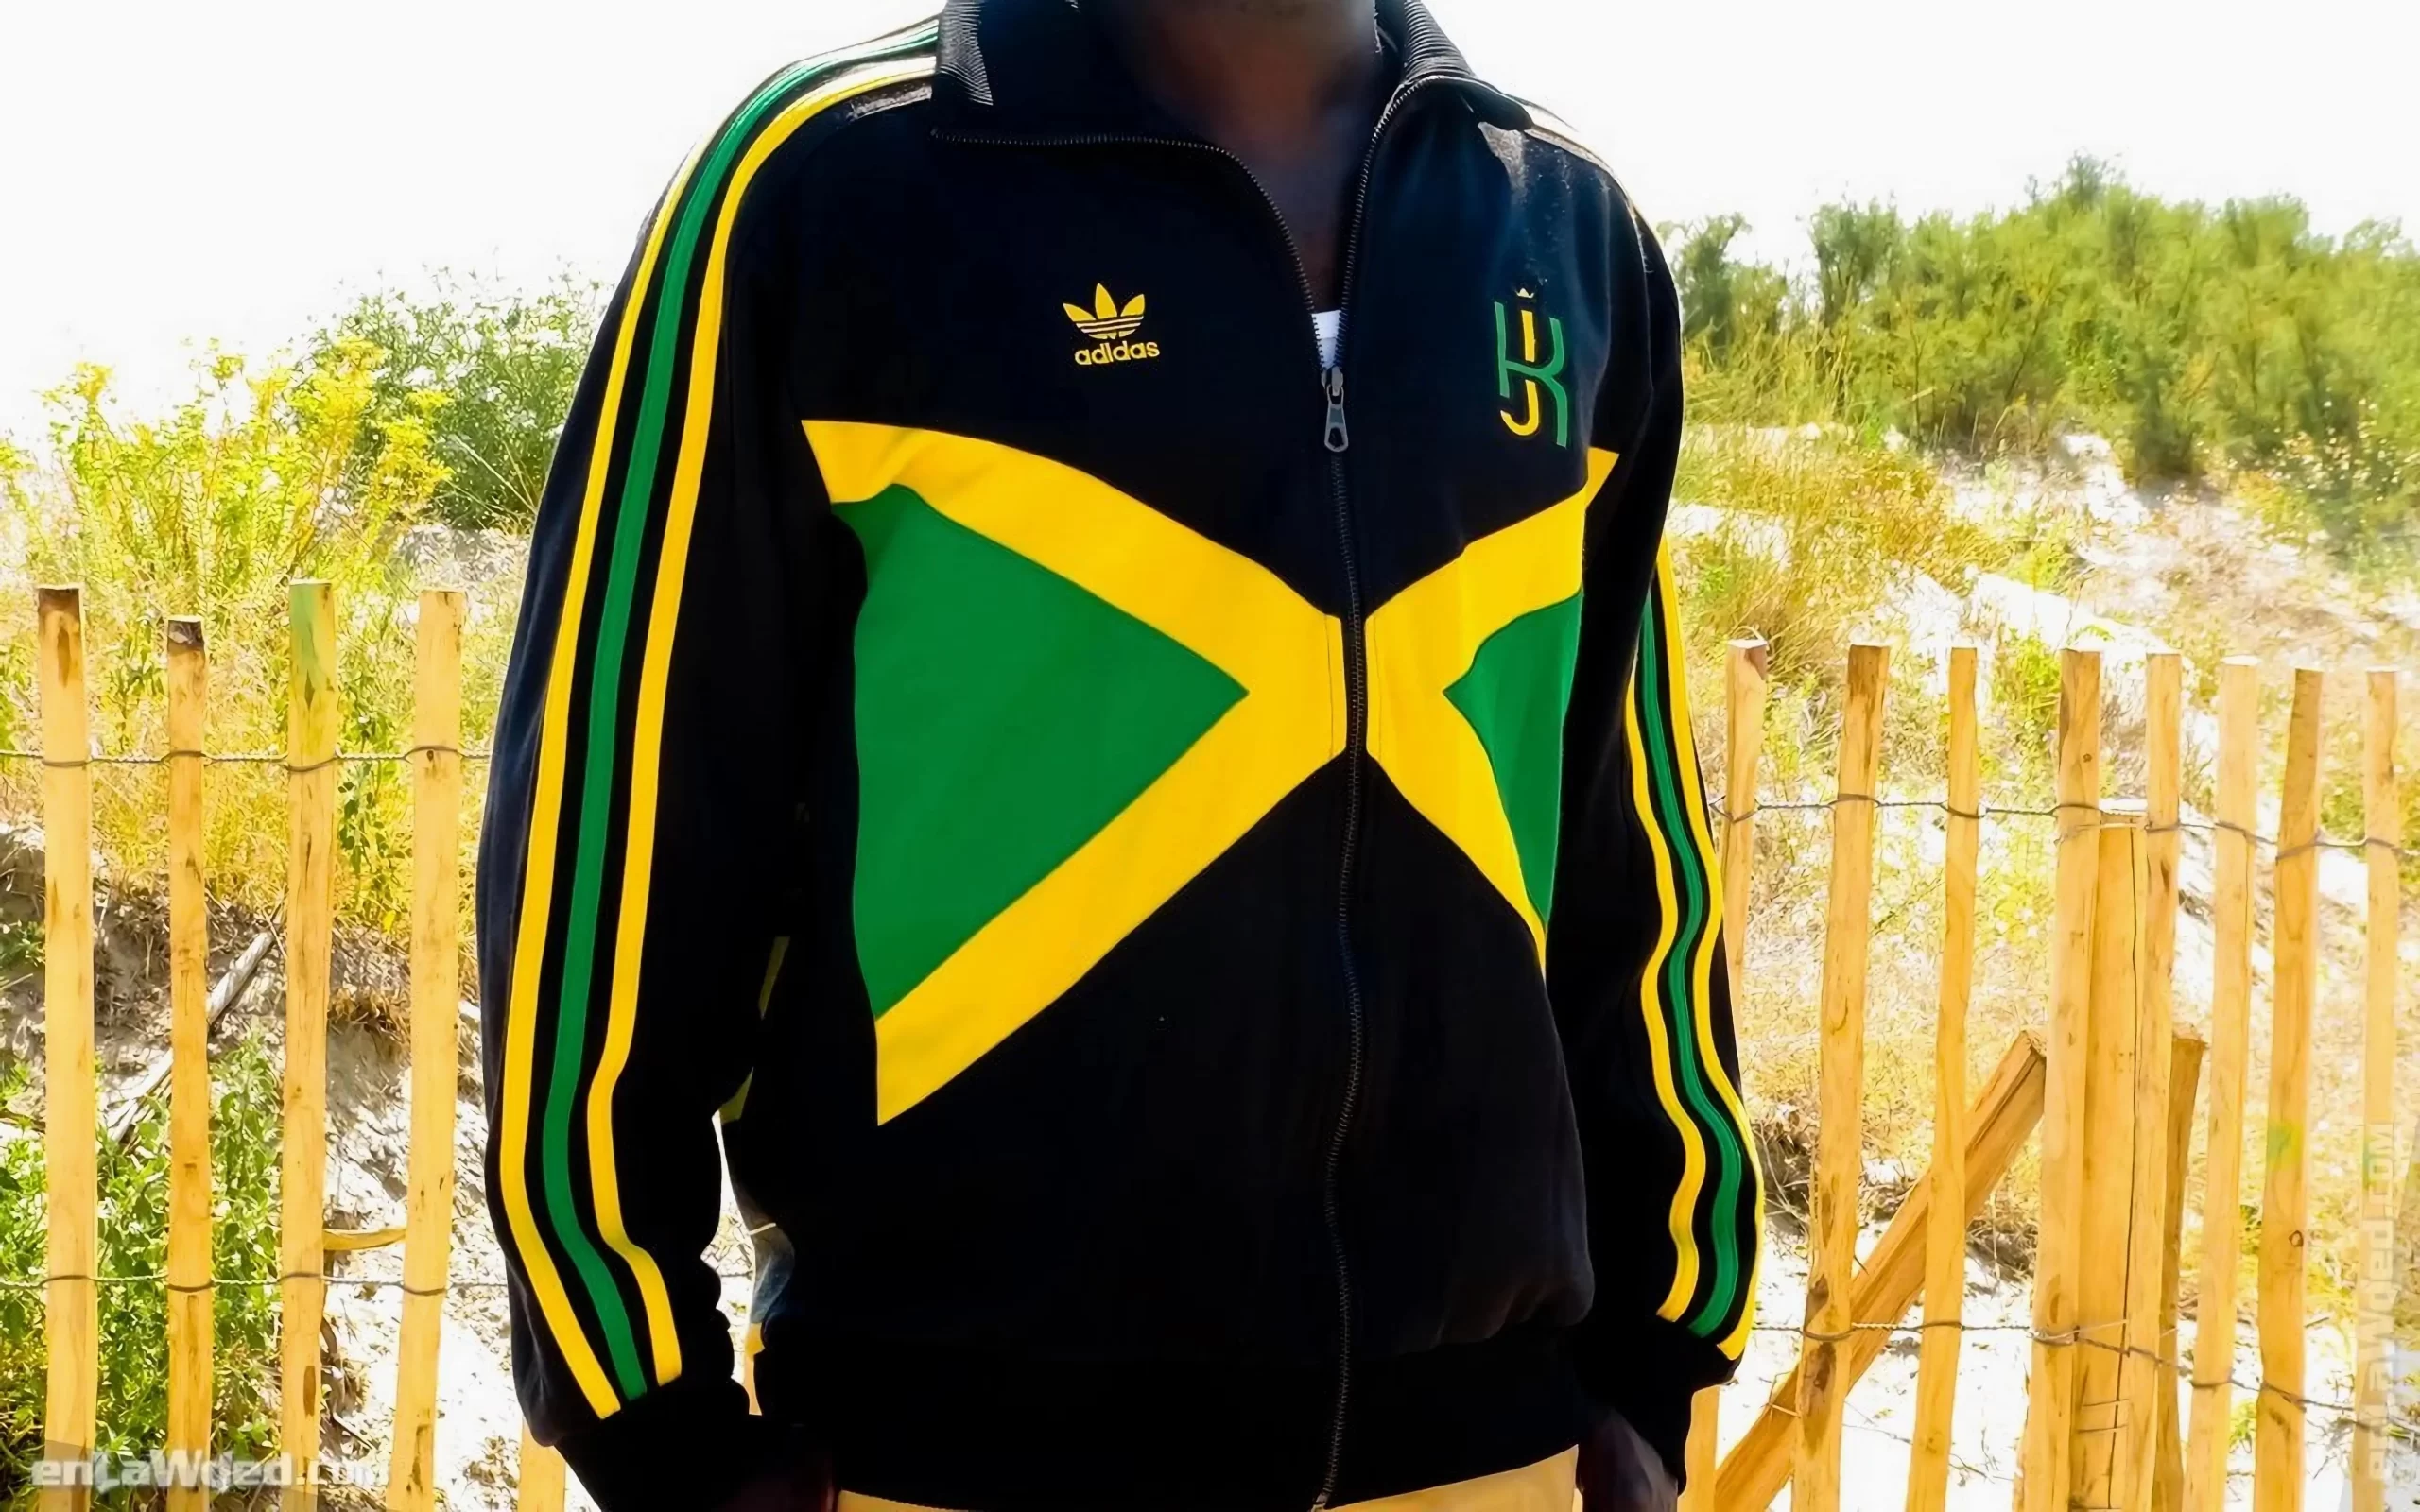 Men’s 2006 Kingston Jamaica TT by Adidas Originals: Blessed (EnLawded.com file #lmc3ld587jgd60a6cjy)